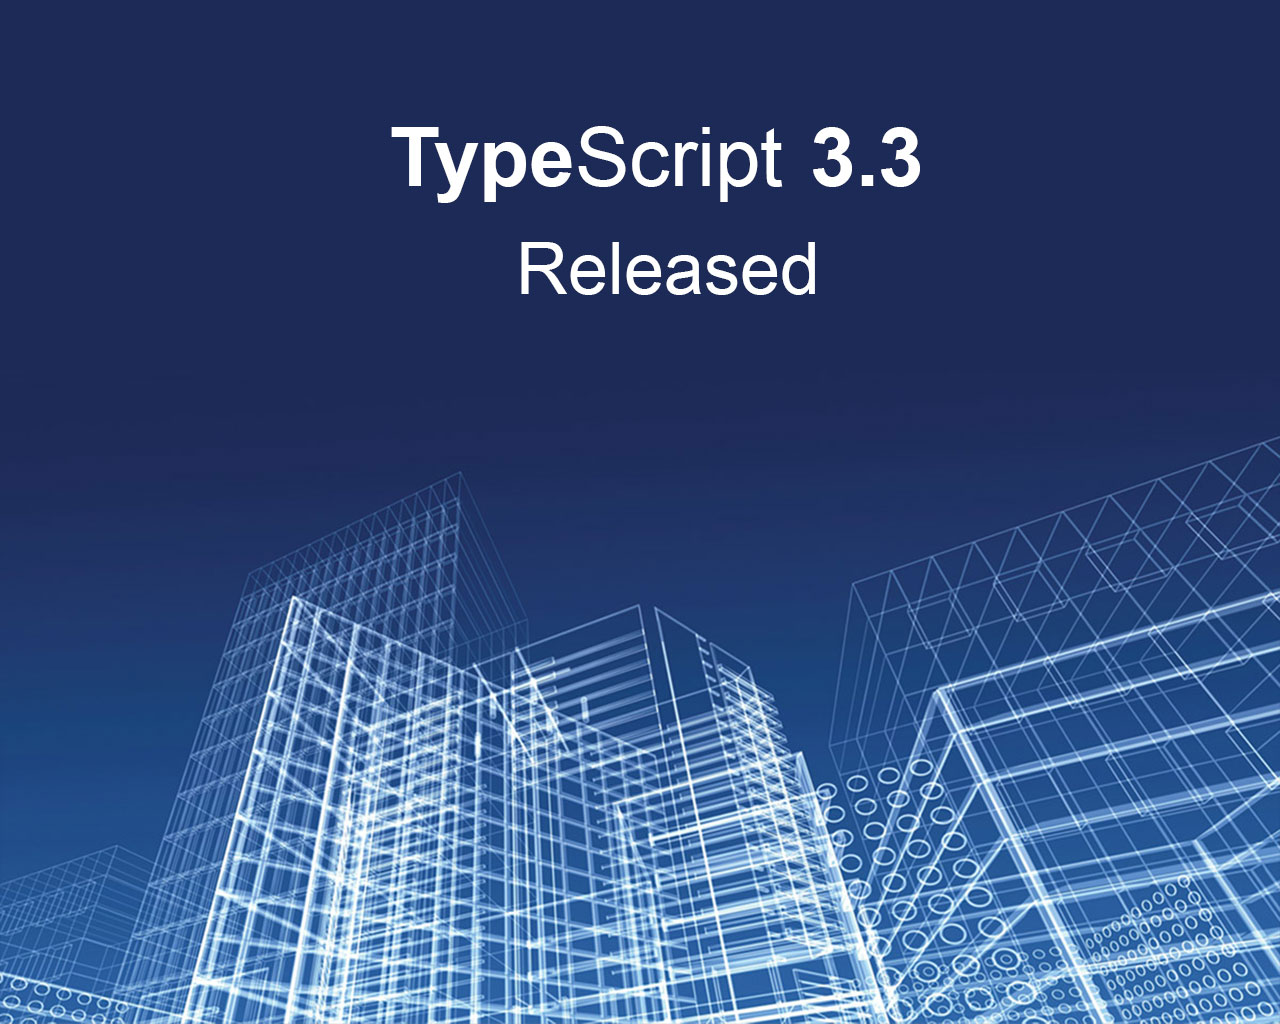 TypeScript 3.3 released